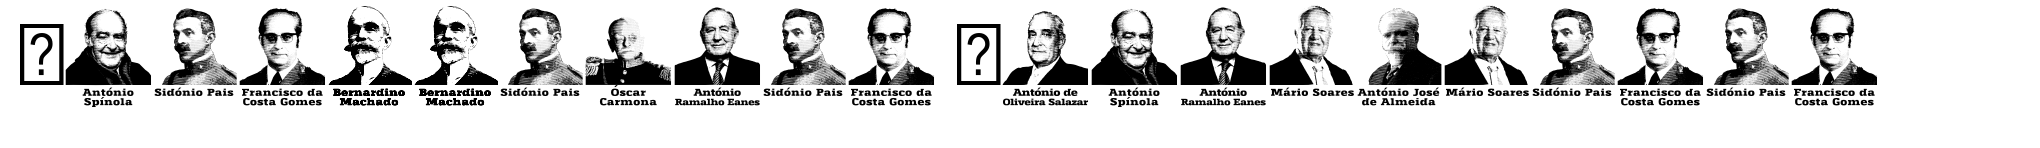 Presidentes Portugueses image